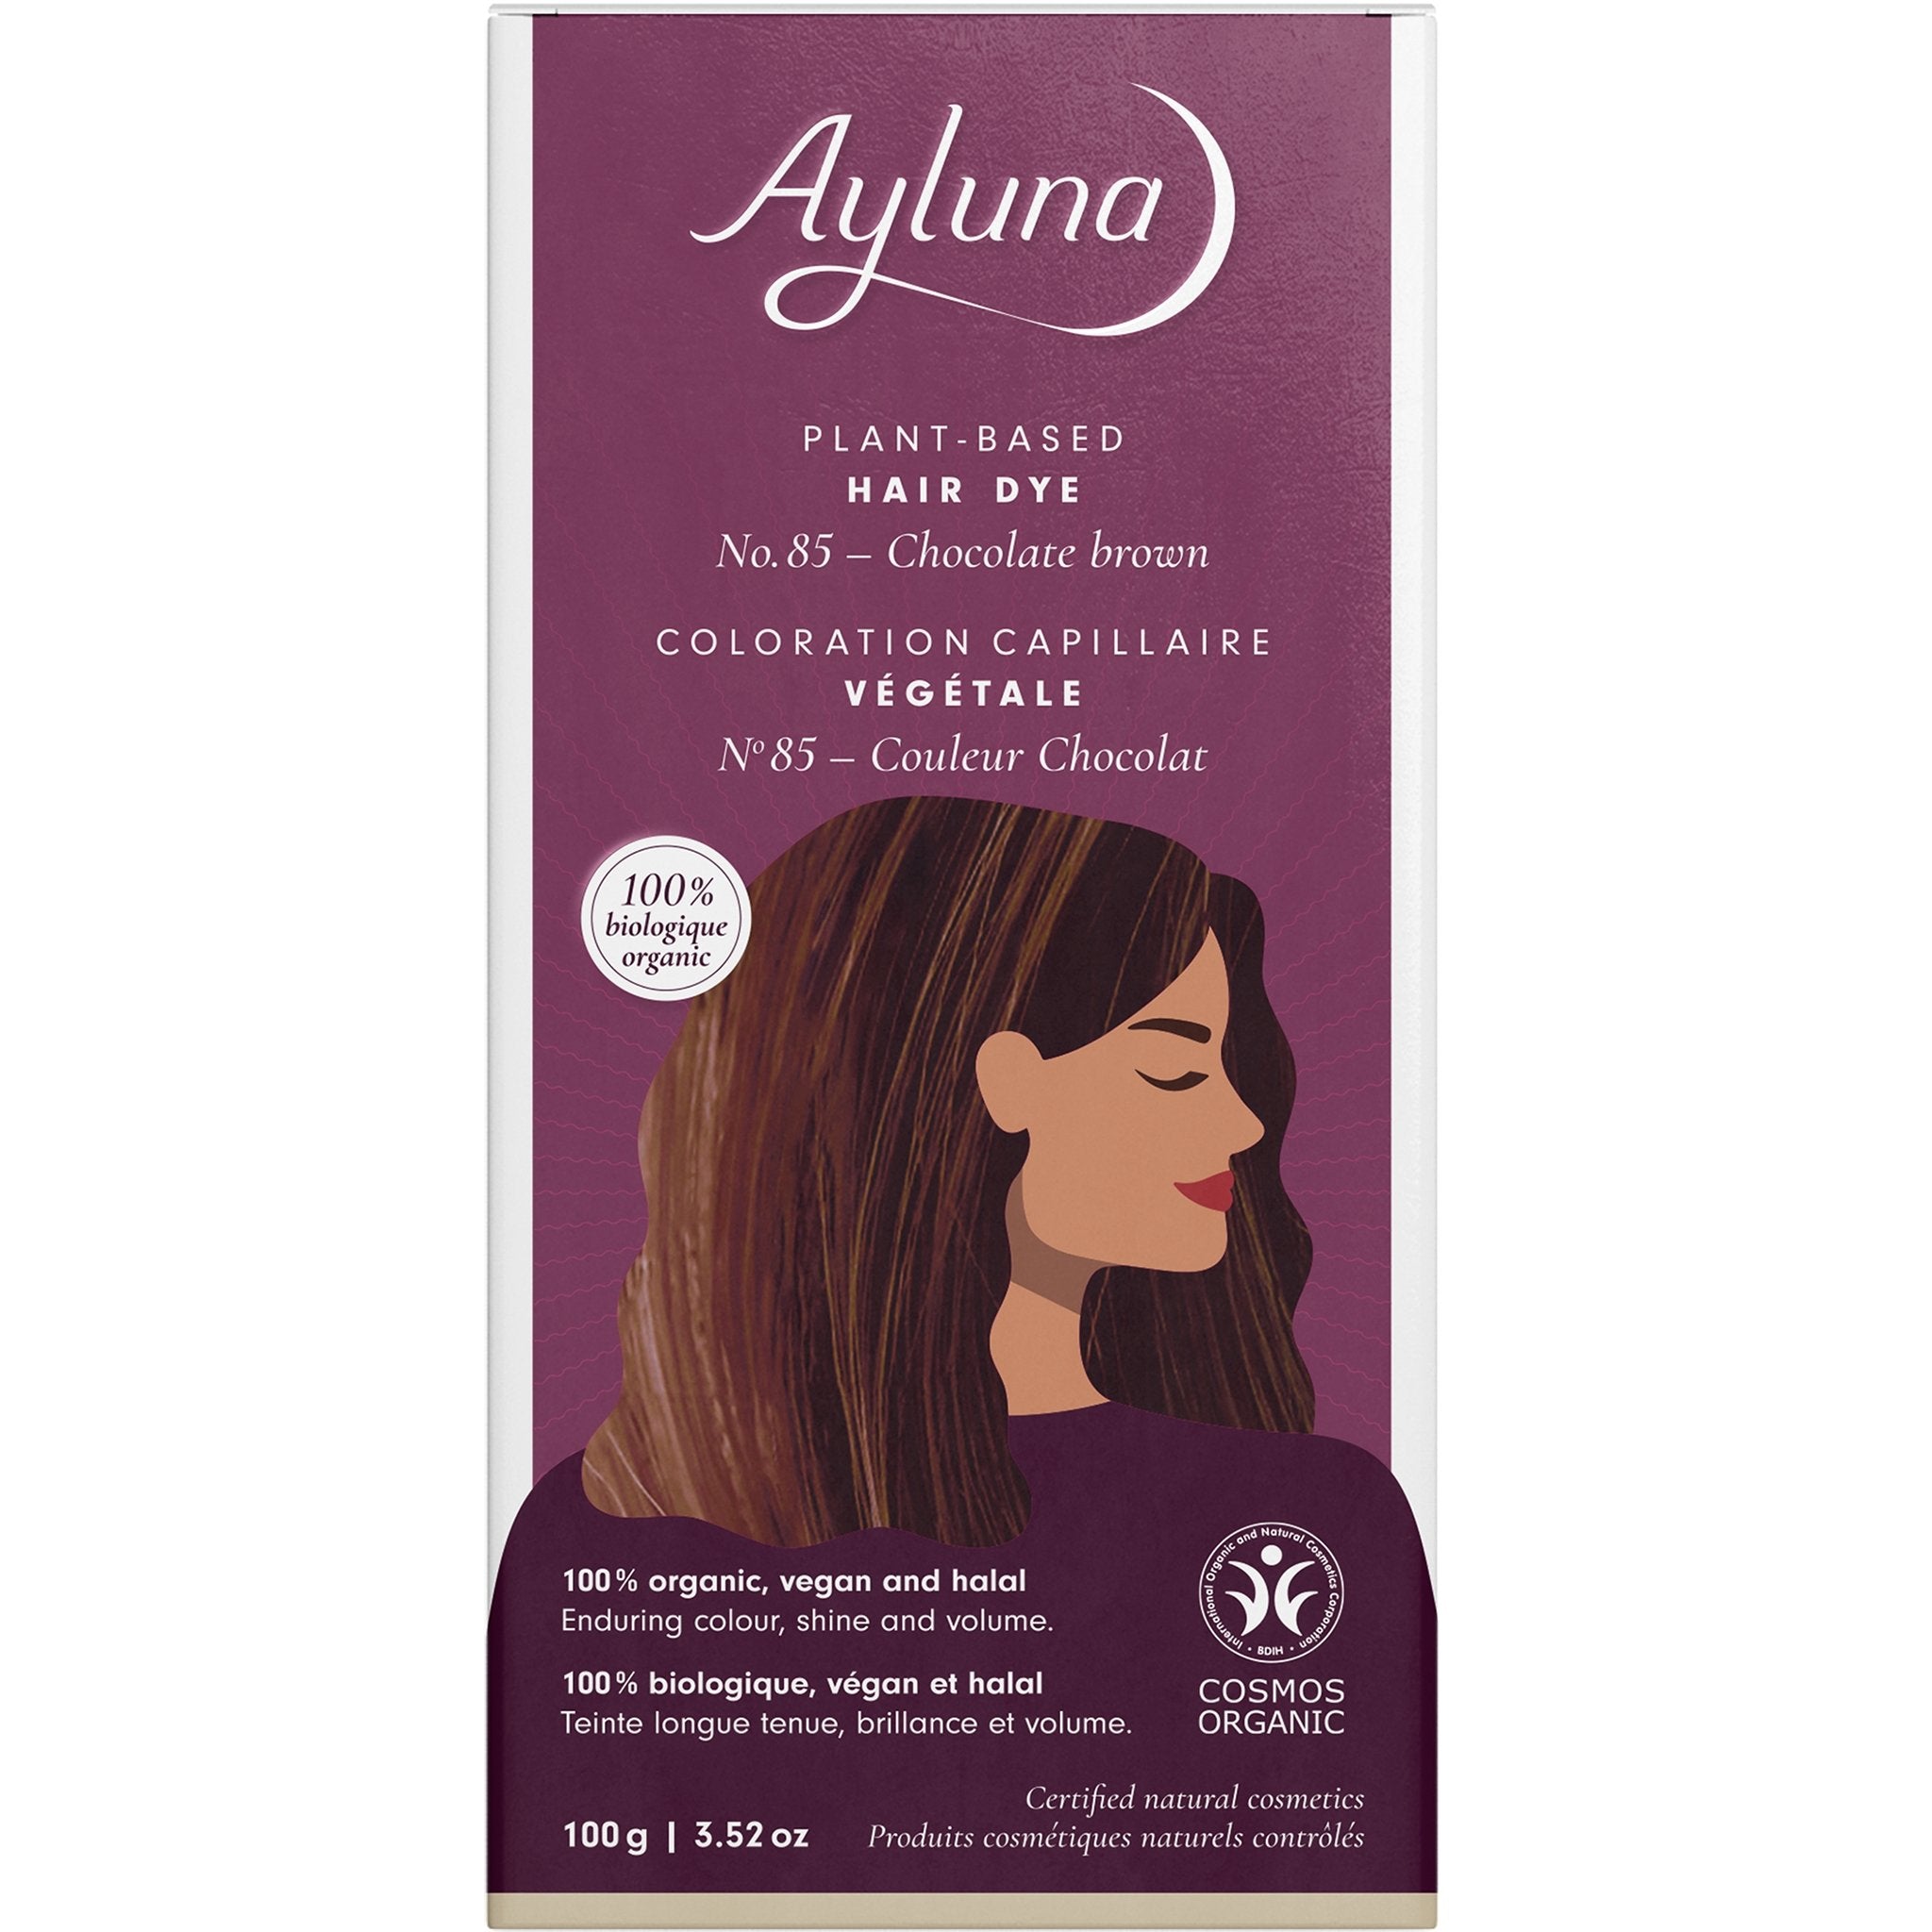 Plant-based Hair Dye - Chocolate Brown - mypure.co.uk